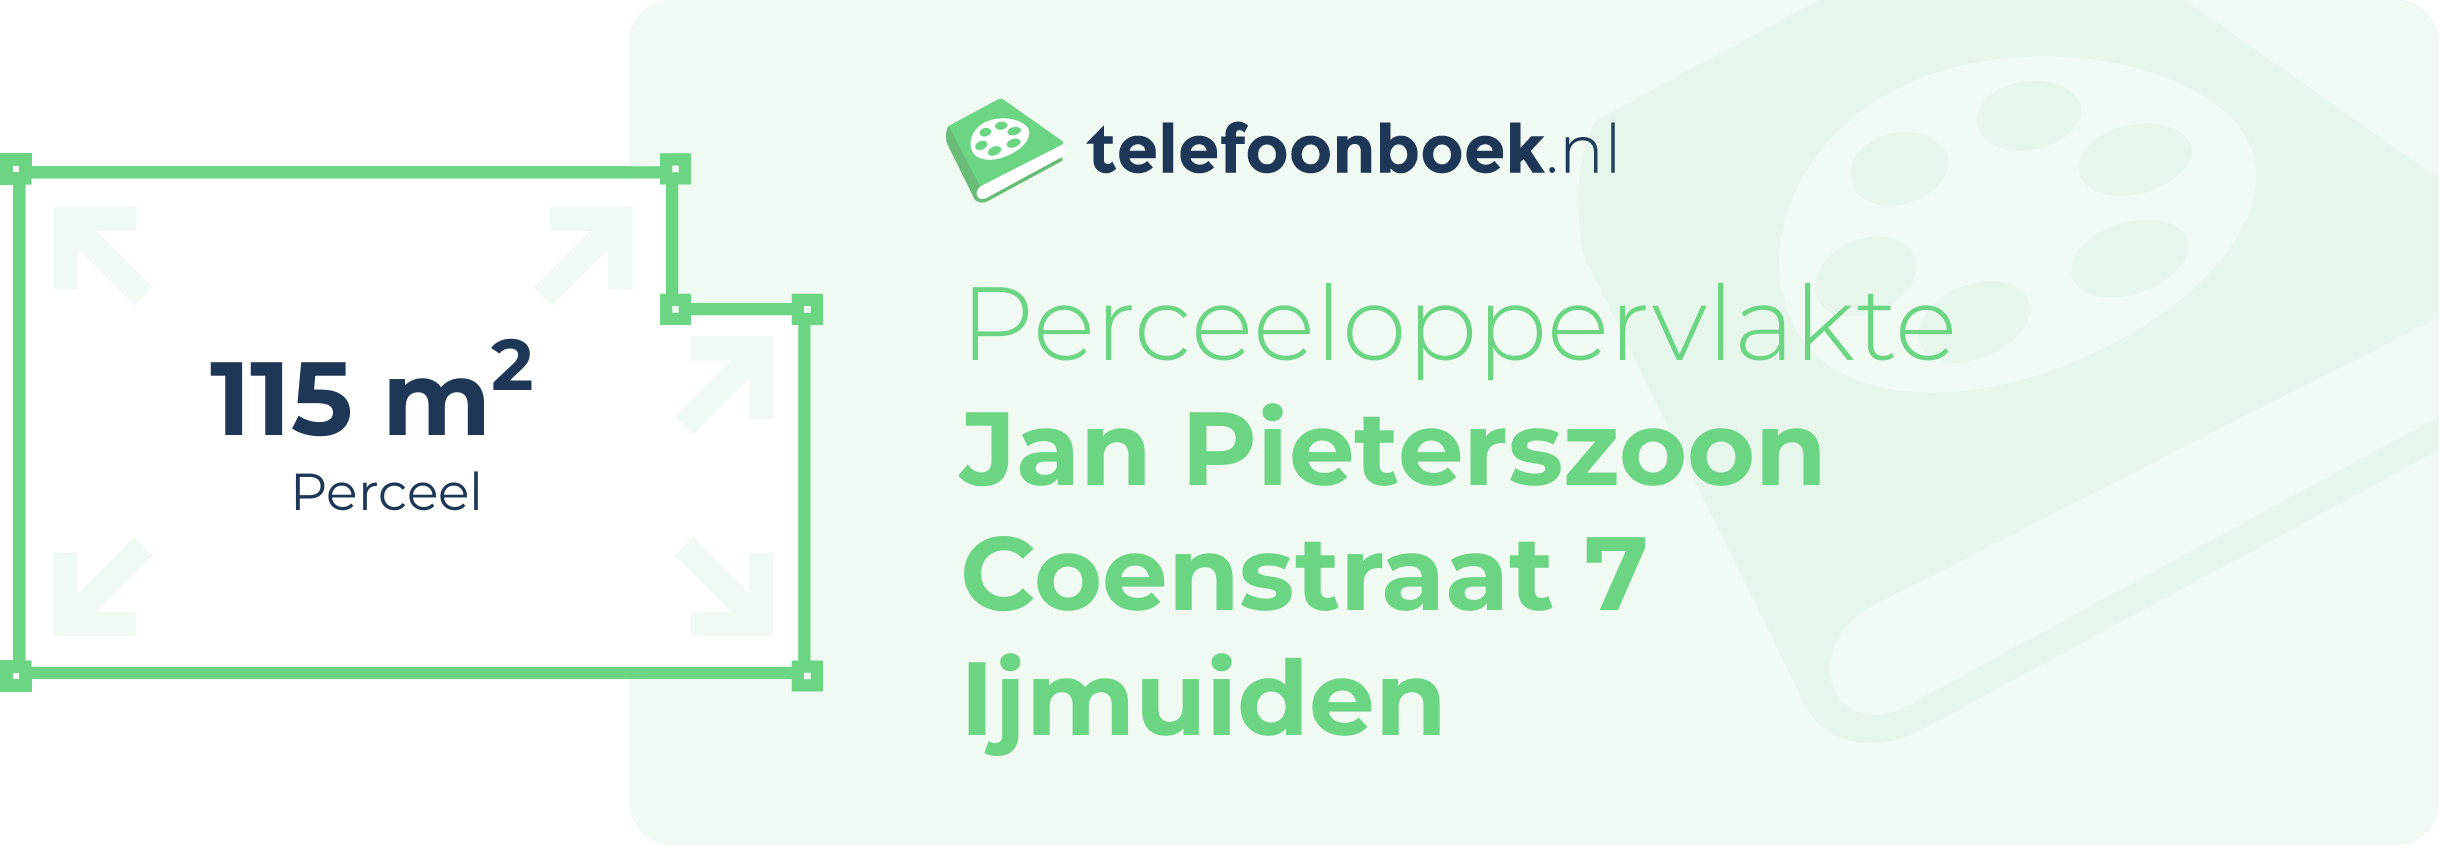 Perceeloppervlakte Jan Pieterszoon Coenstraat 7 Ijmuiden